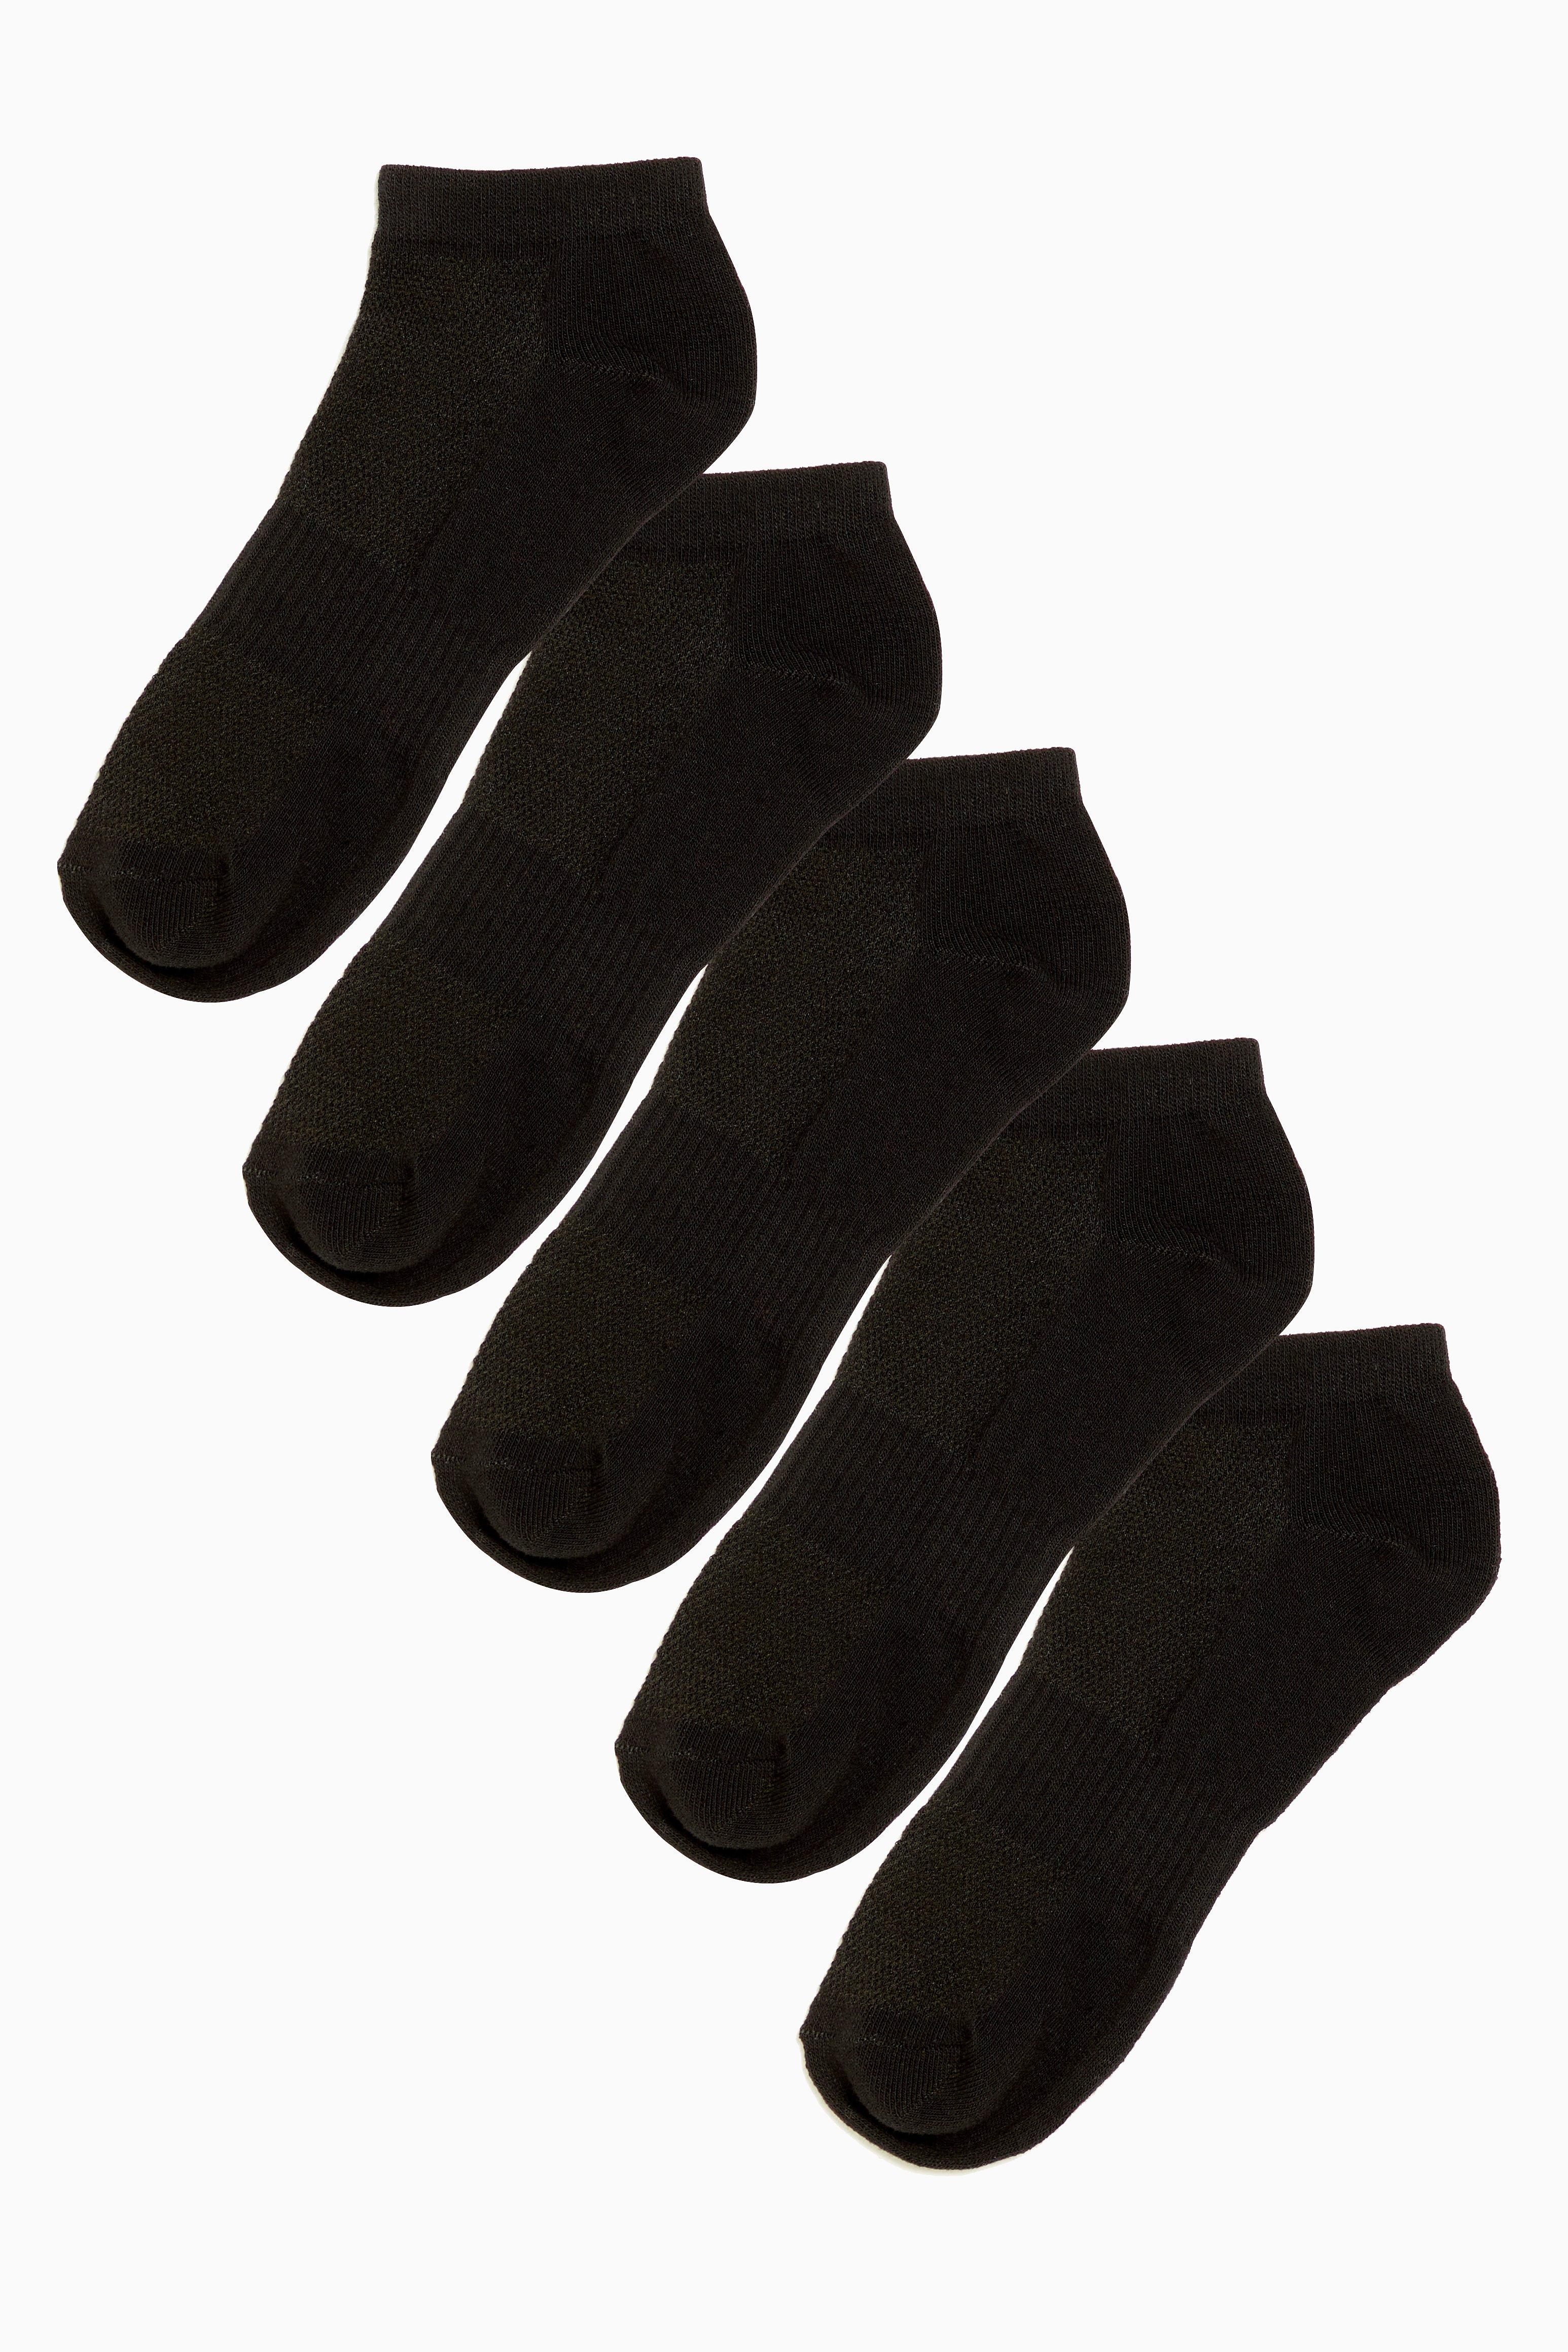 men's pack of 5 cotton rich black trainer socks - mens - size: 6-8